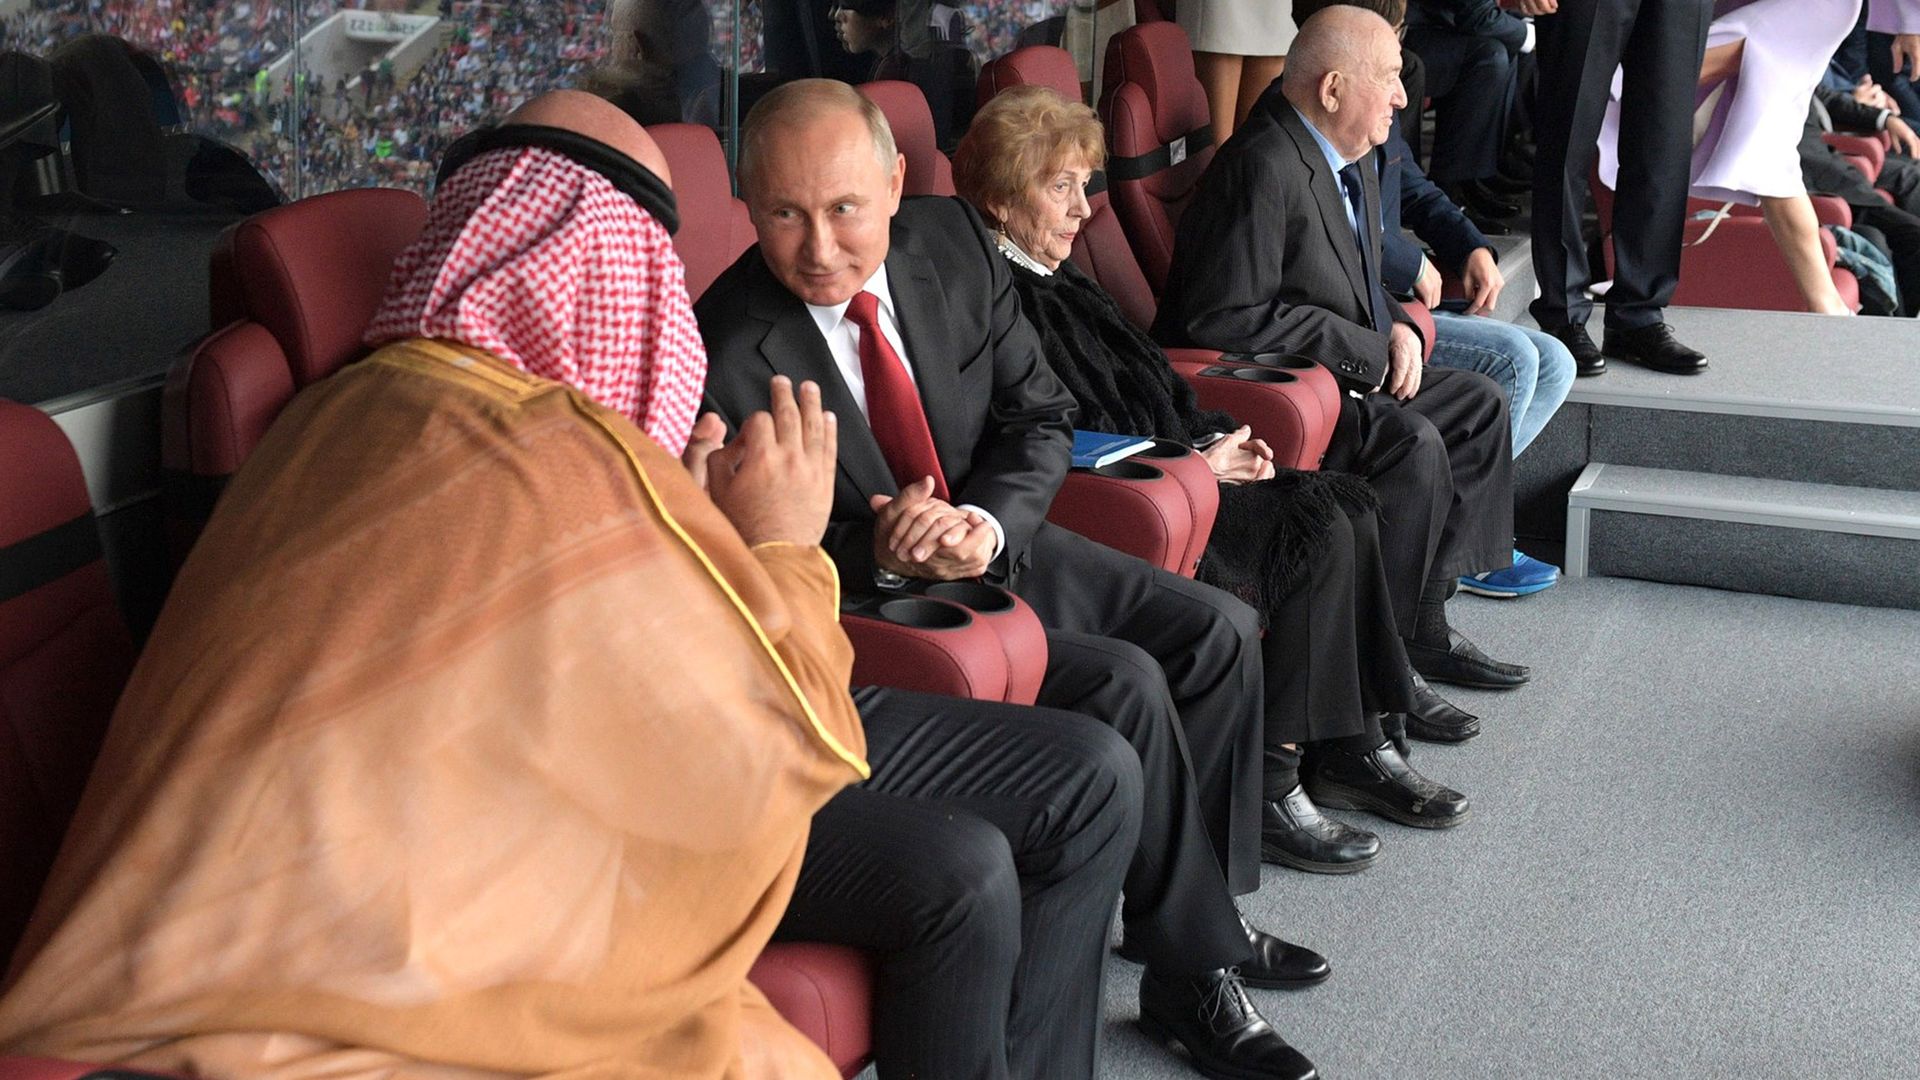  Saudi Arabia's Crown Prince Mohammed Bin Salman Al Saud and Russia's President Vladimir Putin talk before the 2018 FIFA World Cup